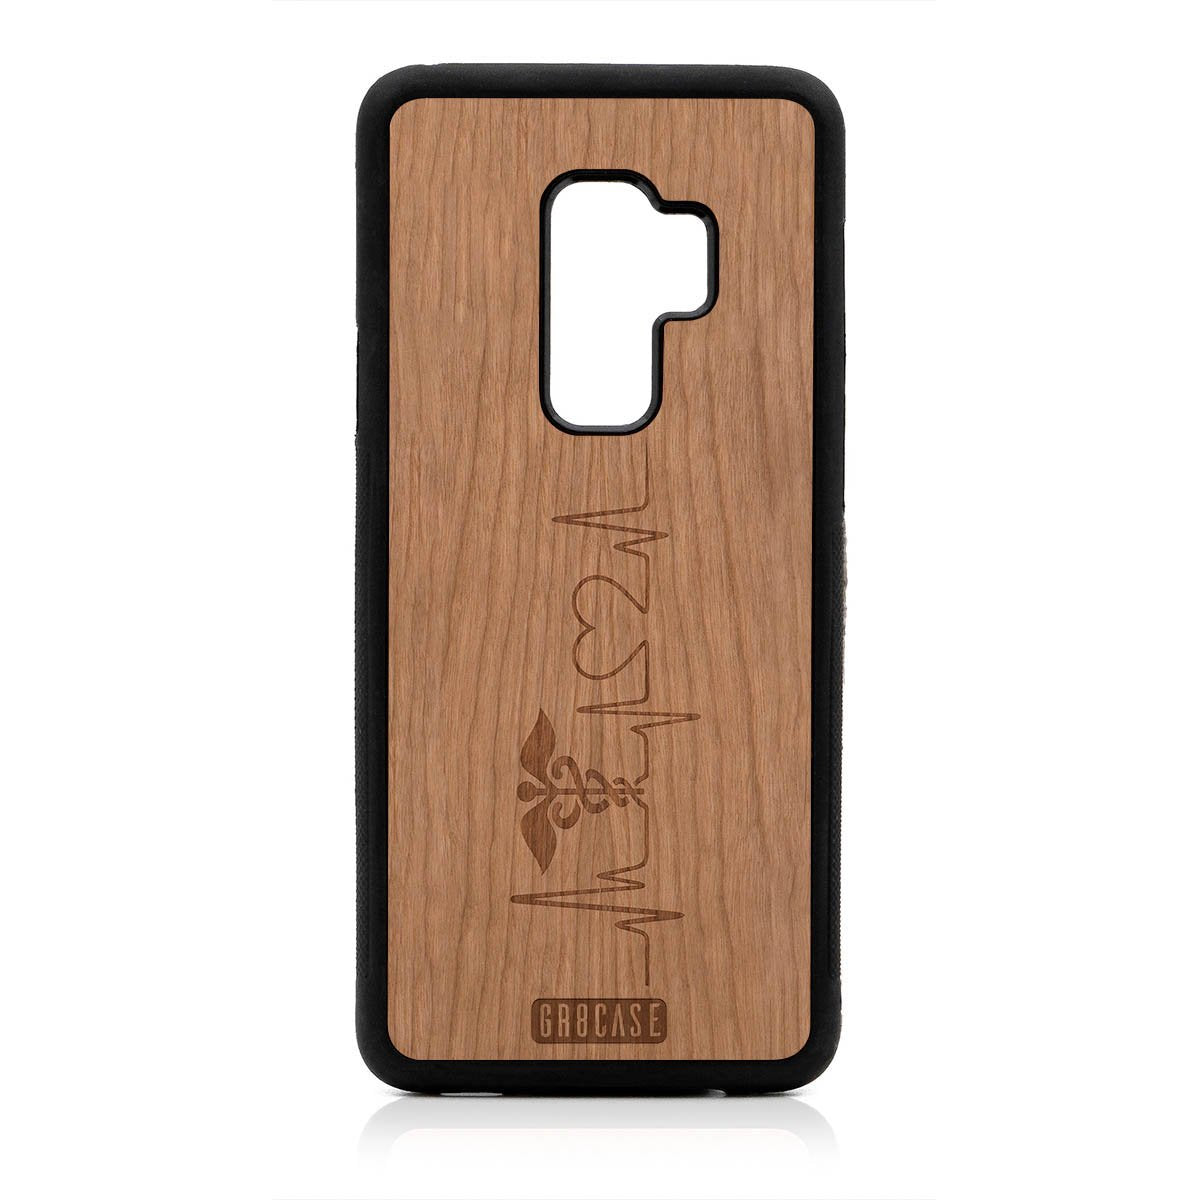 Hero's Heart (Nurse, Doctor) Design Wood Case Samsung Galaxy S9 Plus by GR8CASE